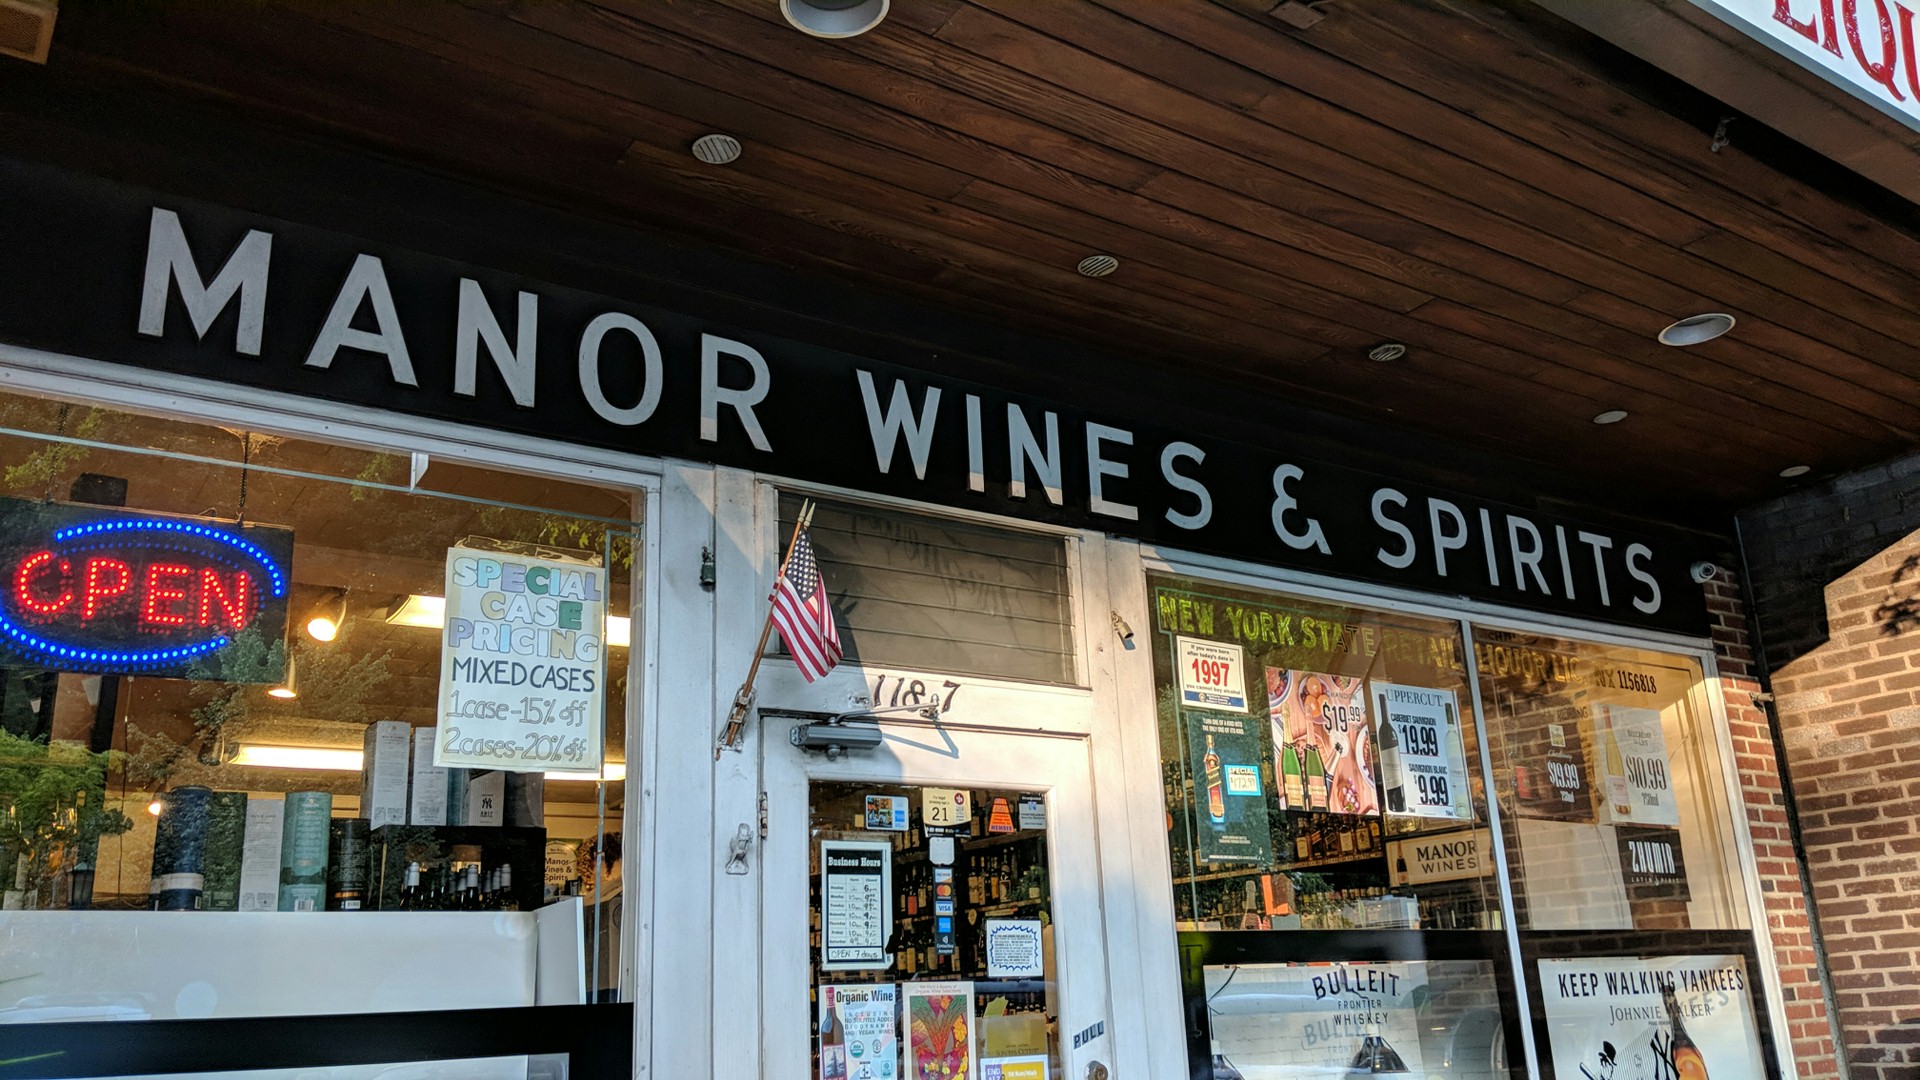 Manor Wines & Spirits